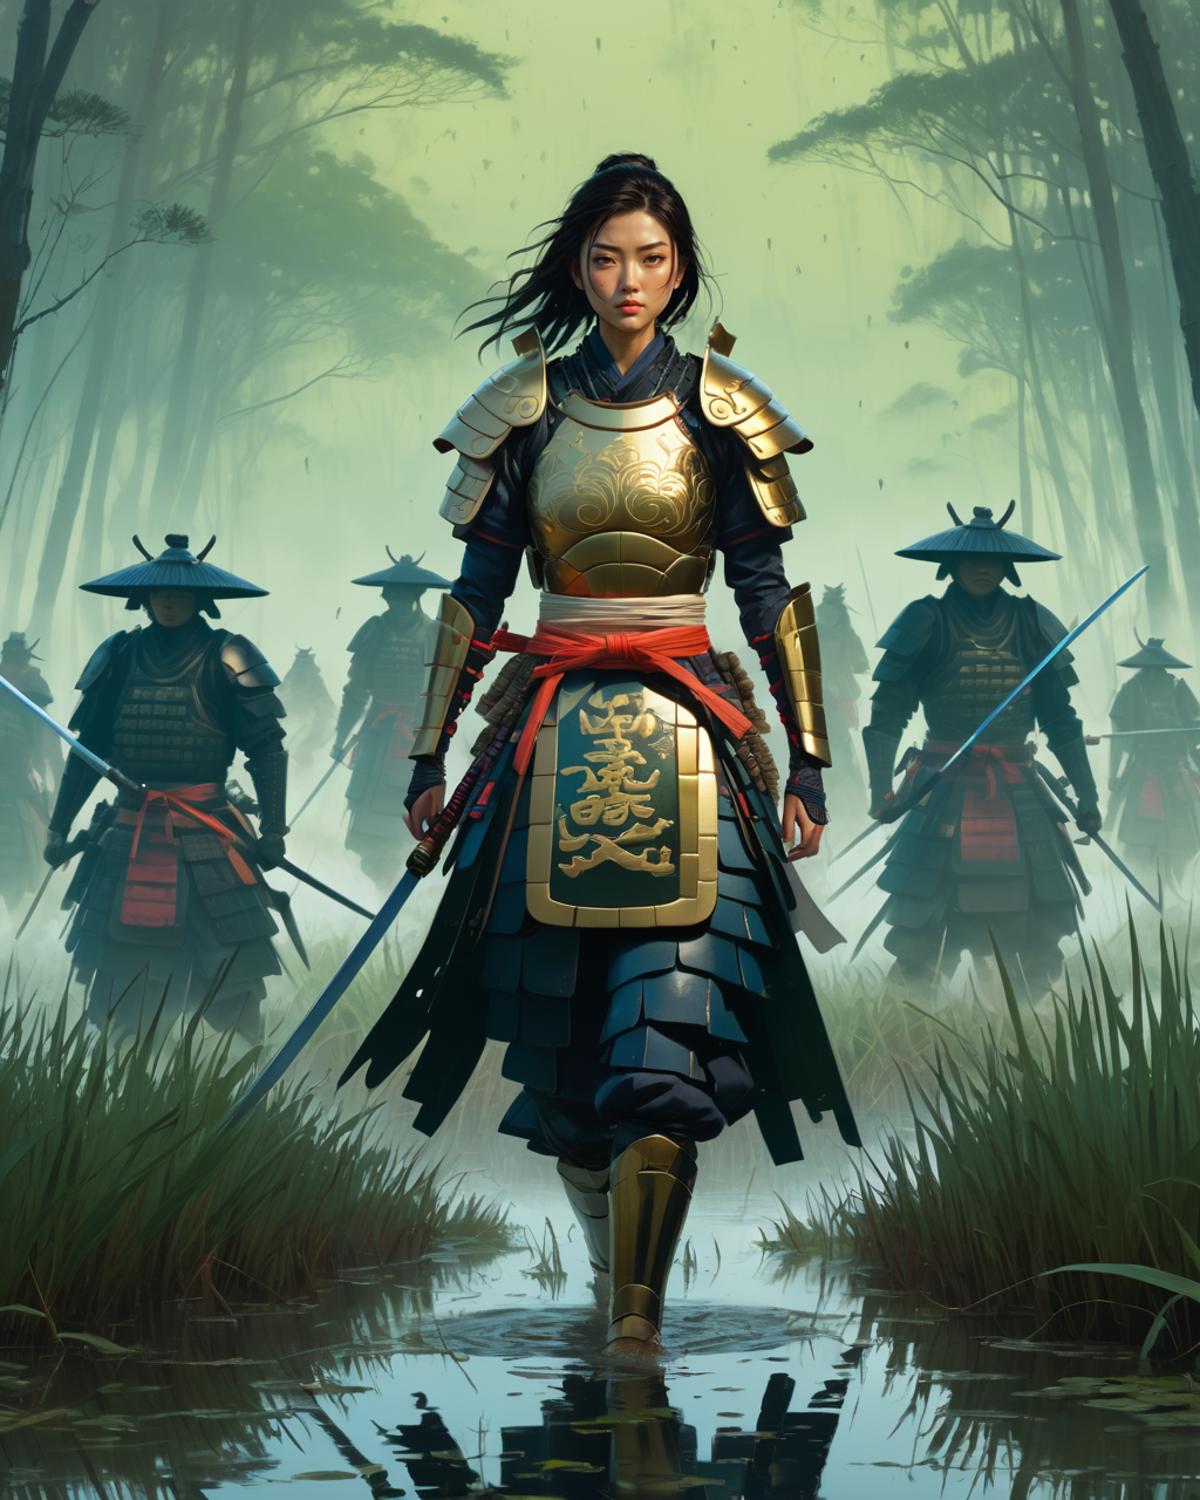 A woman in samurai attire walking through water with other samurai following her.